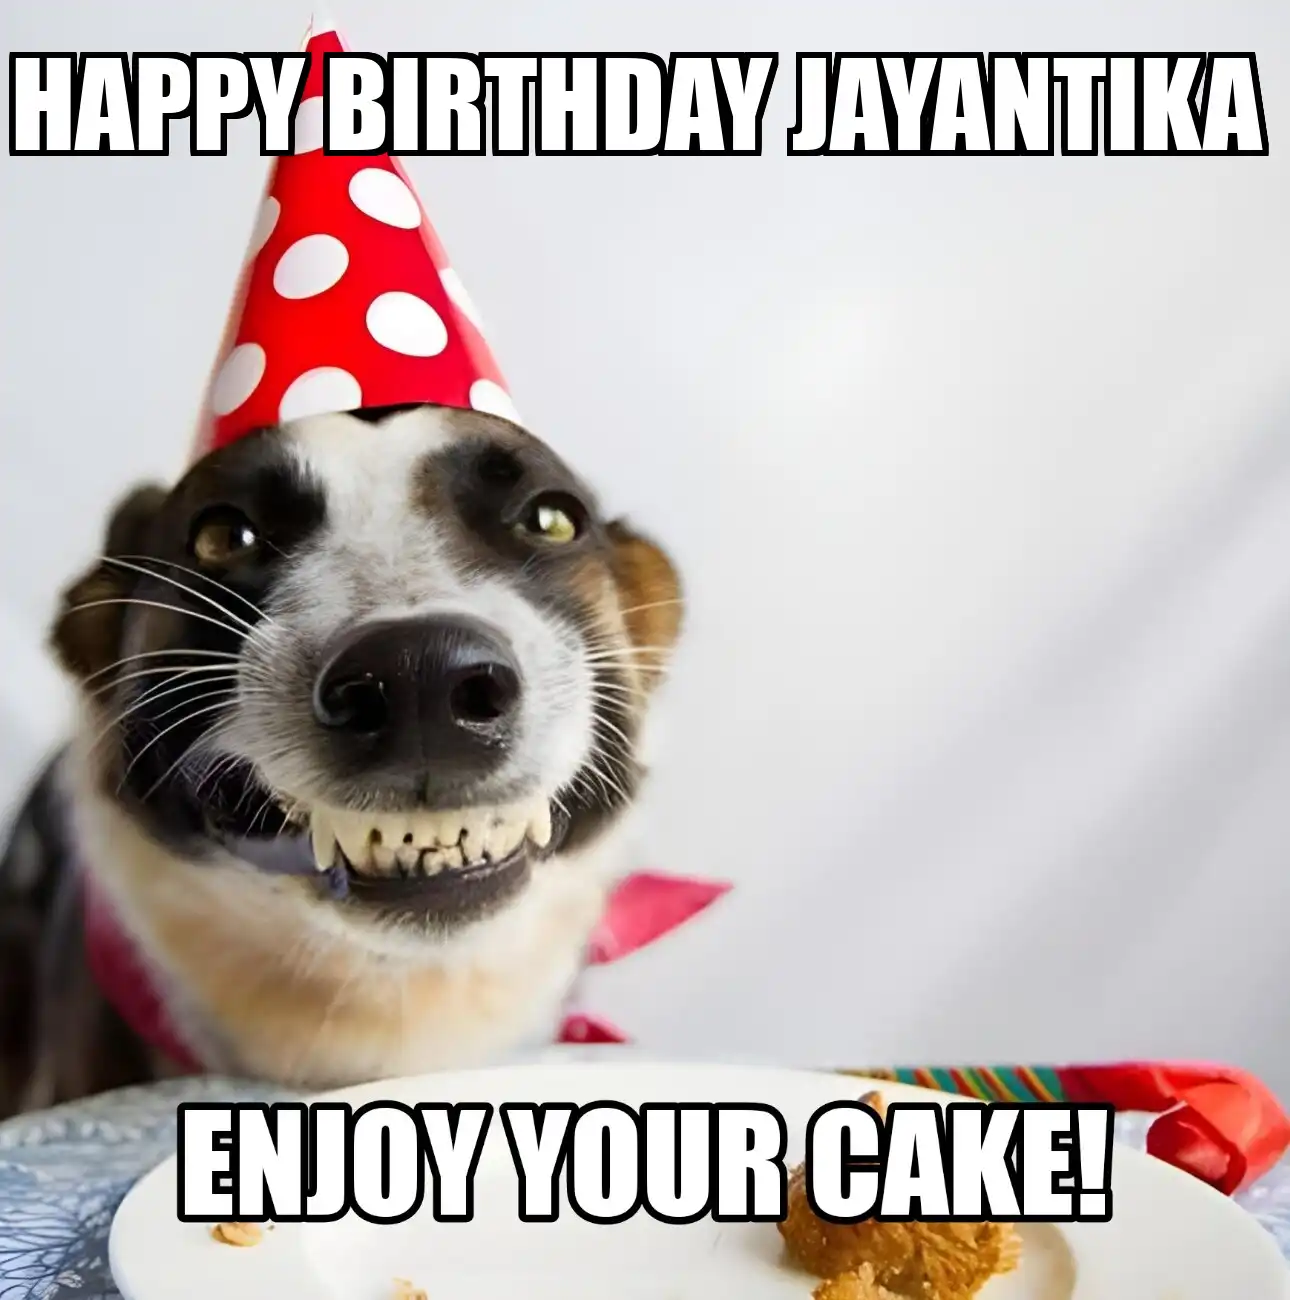 Happy Birthday Jayantika Enjoy Your Cake Dog Meme